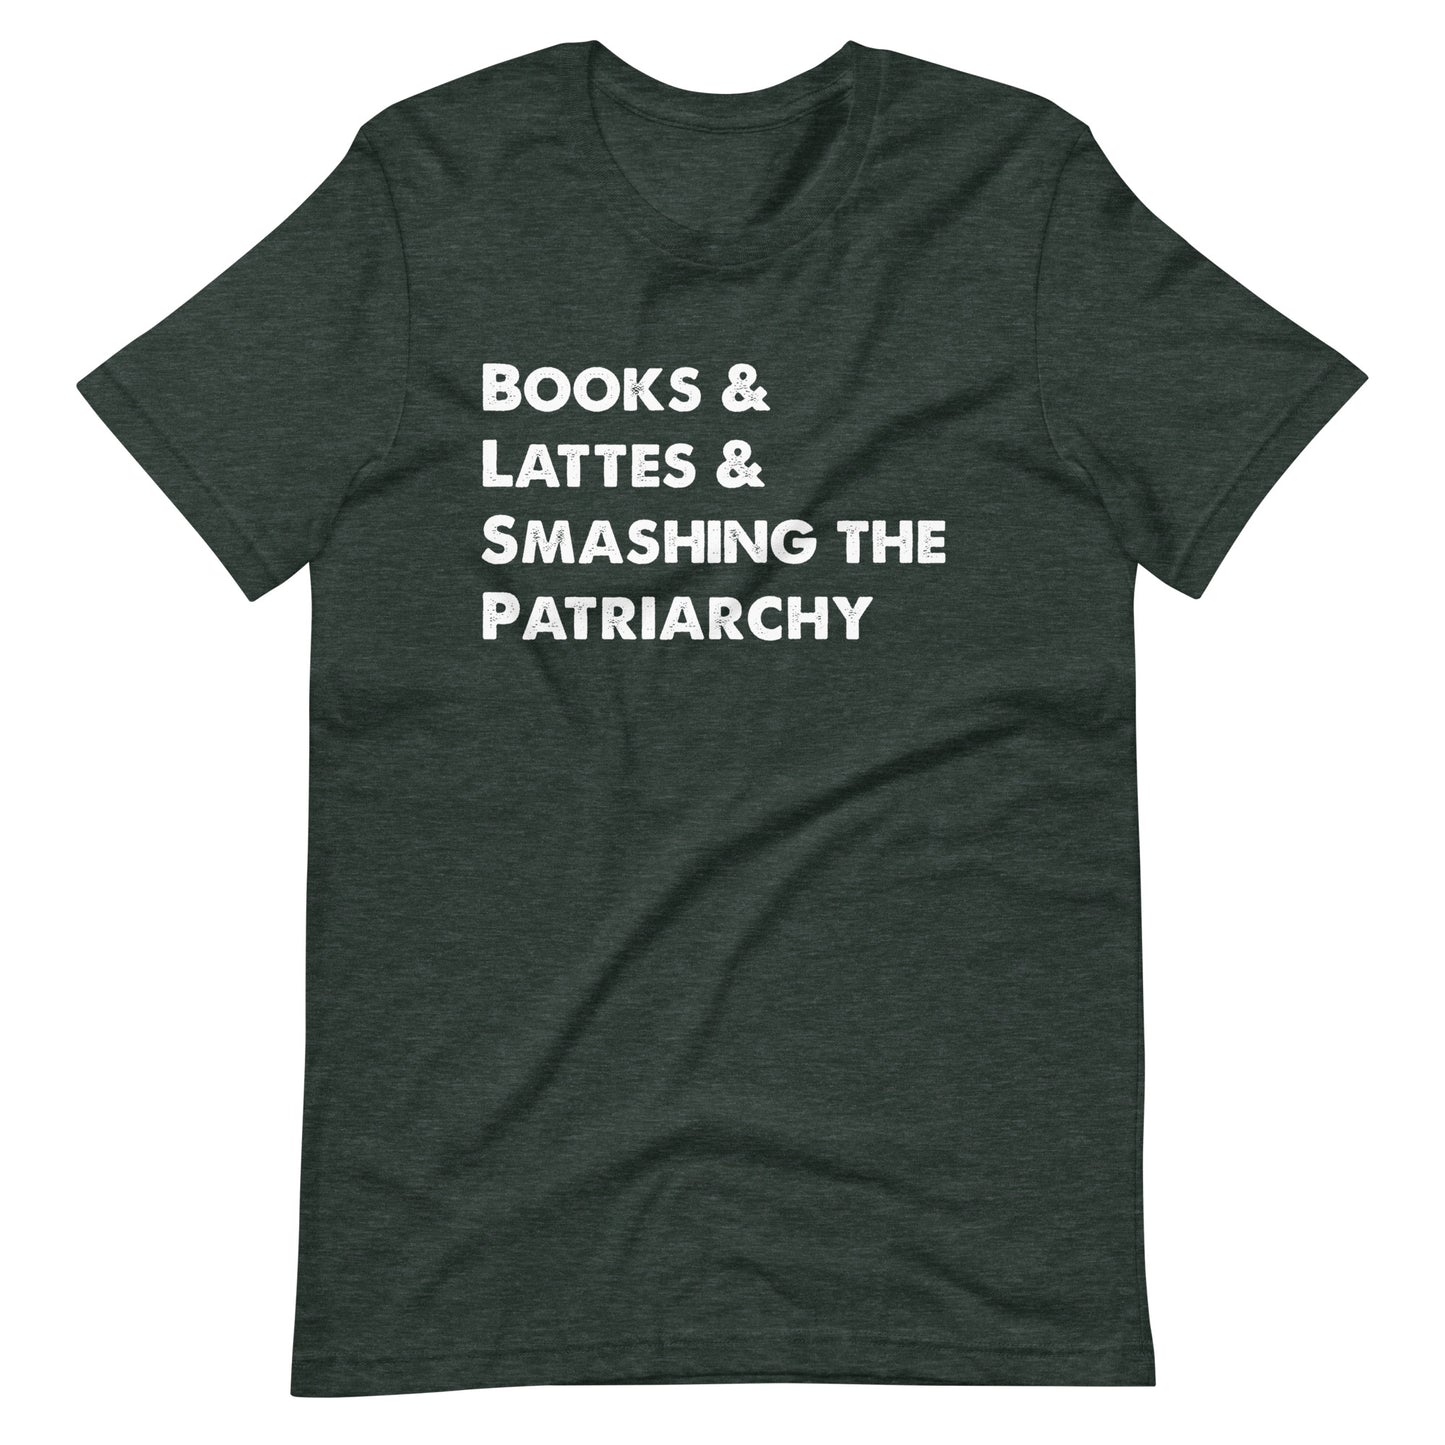 Smashing the Patriarchy t-shirt